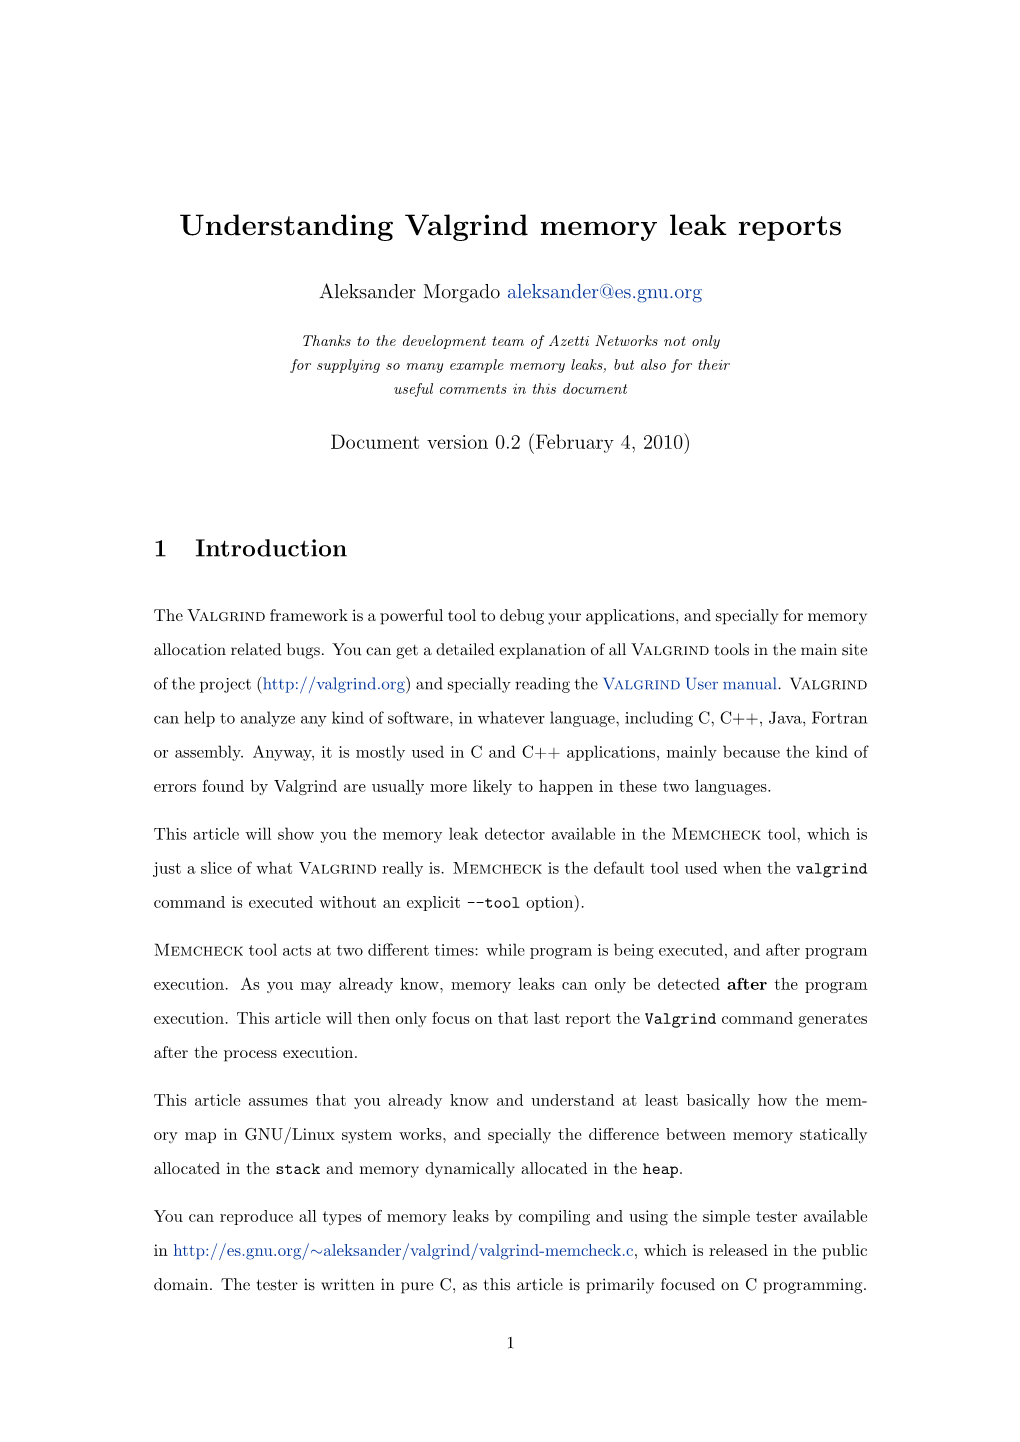 Understanding Valgrind Memory Leak Reports